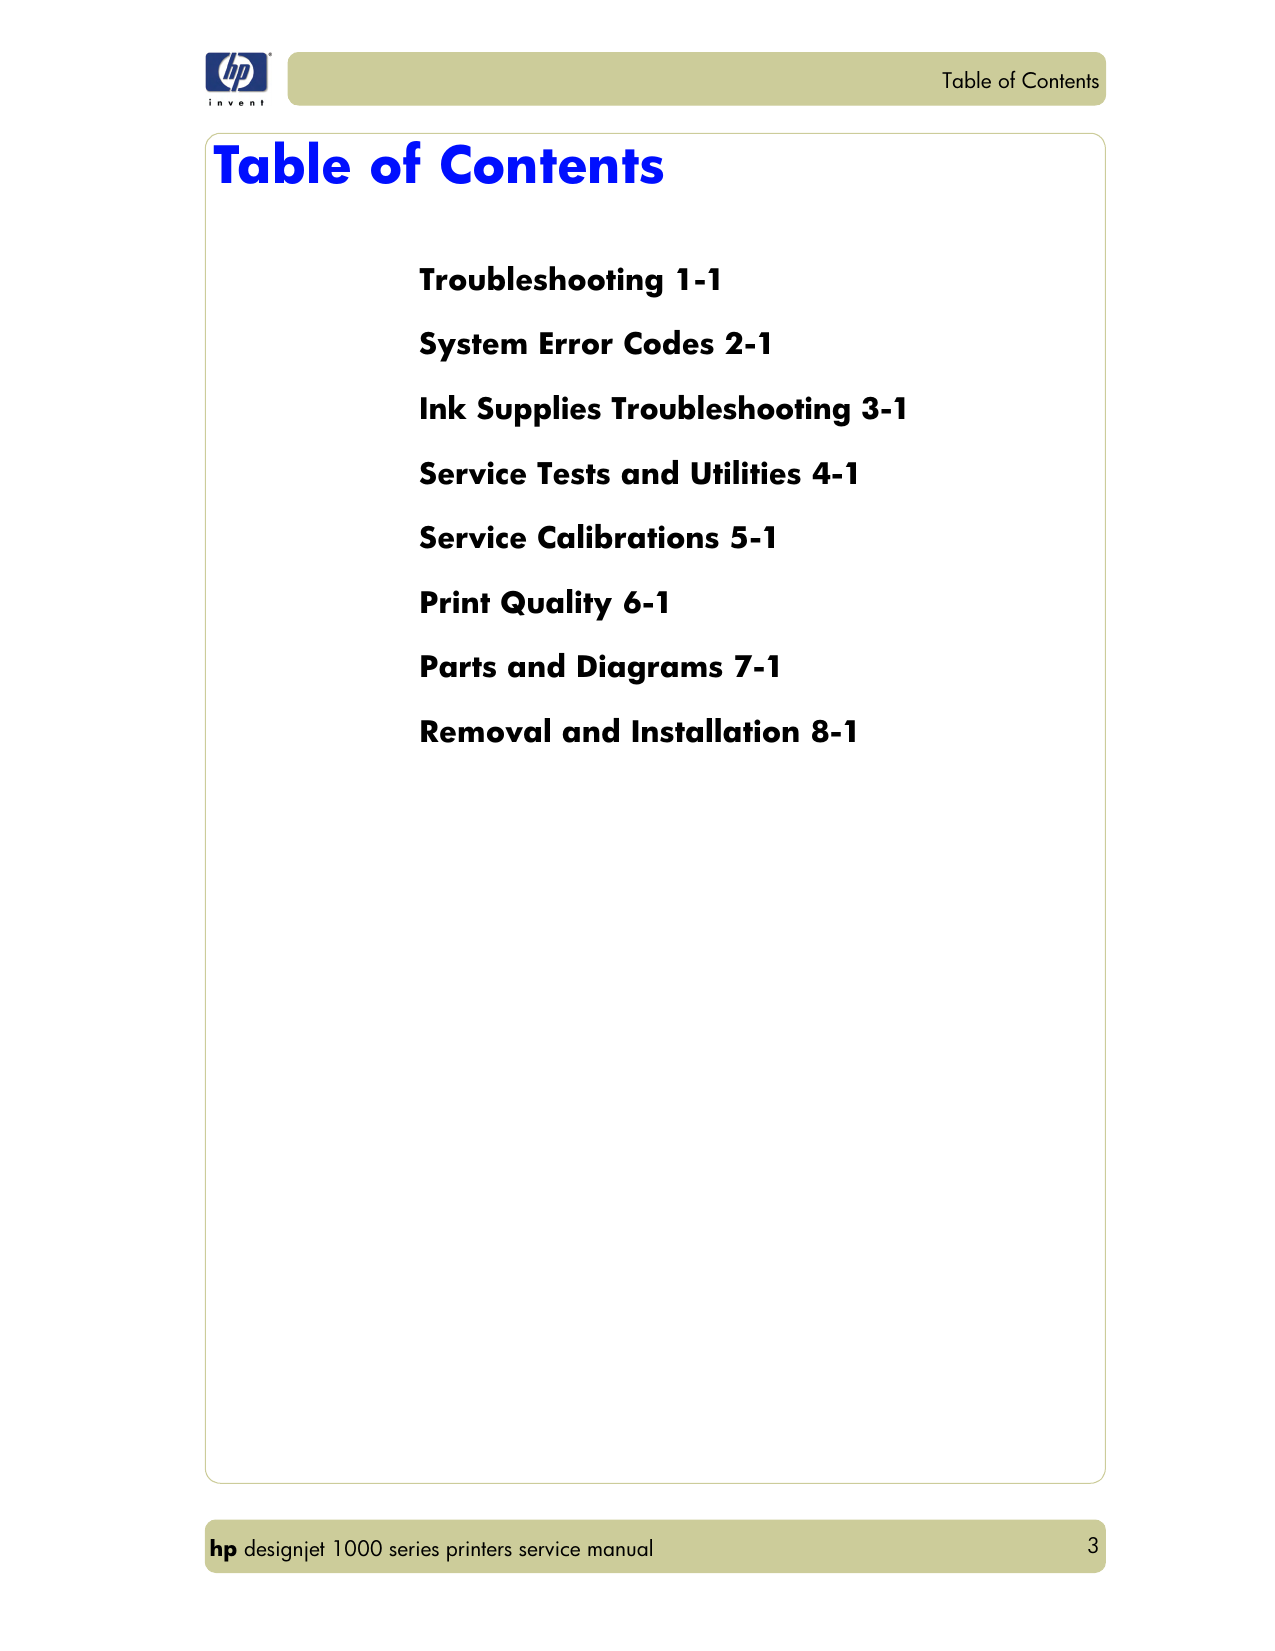 HP DesignJet 4000, 4020 large-format printer service guide Preview image 5